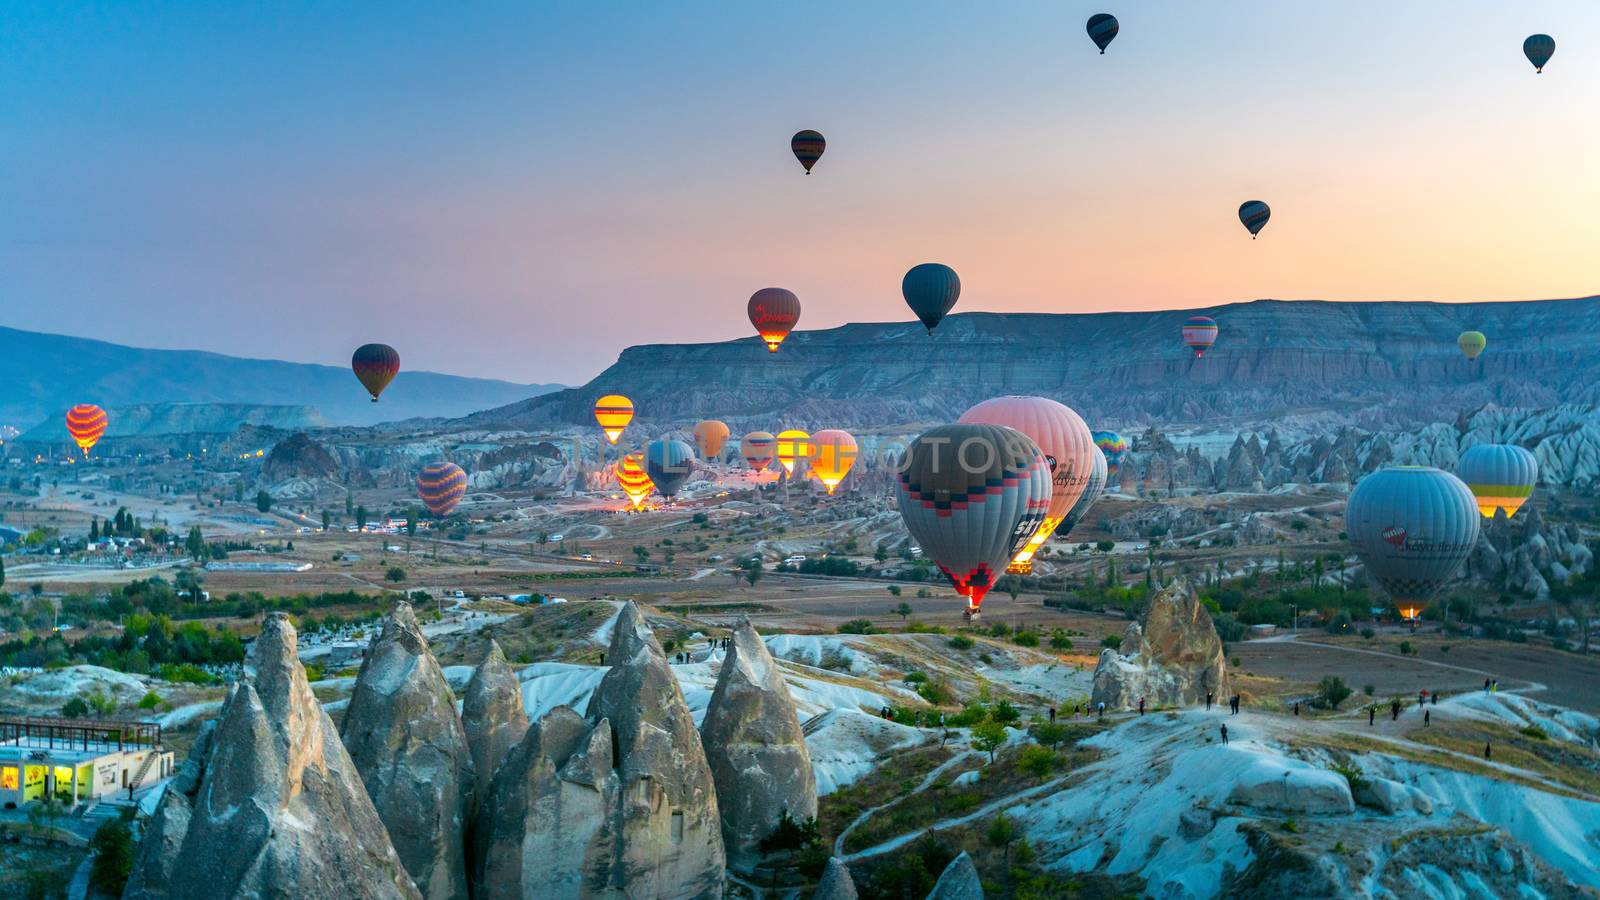 Colorful hot air balloon flying over Cappadocia, Turkey.